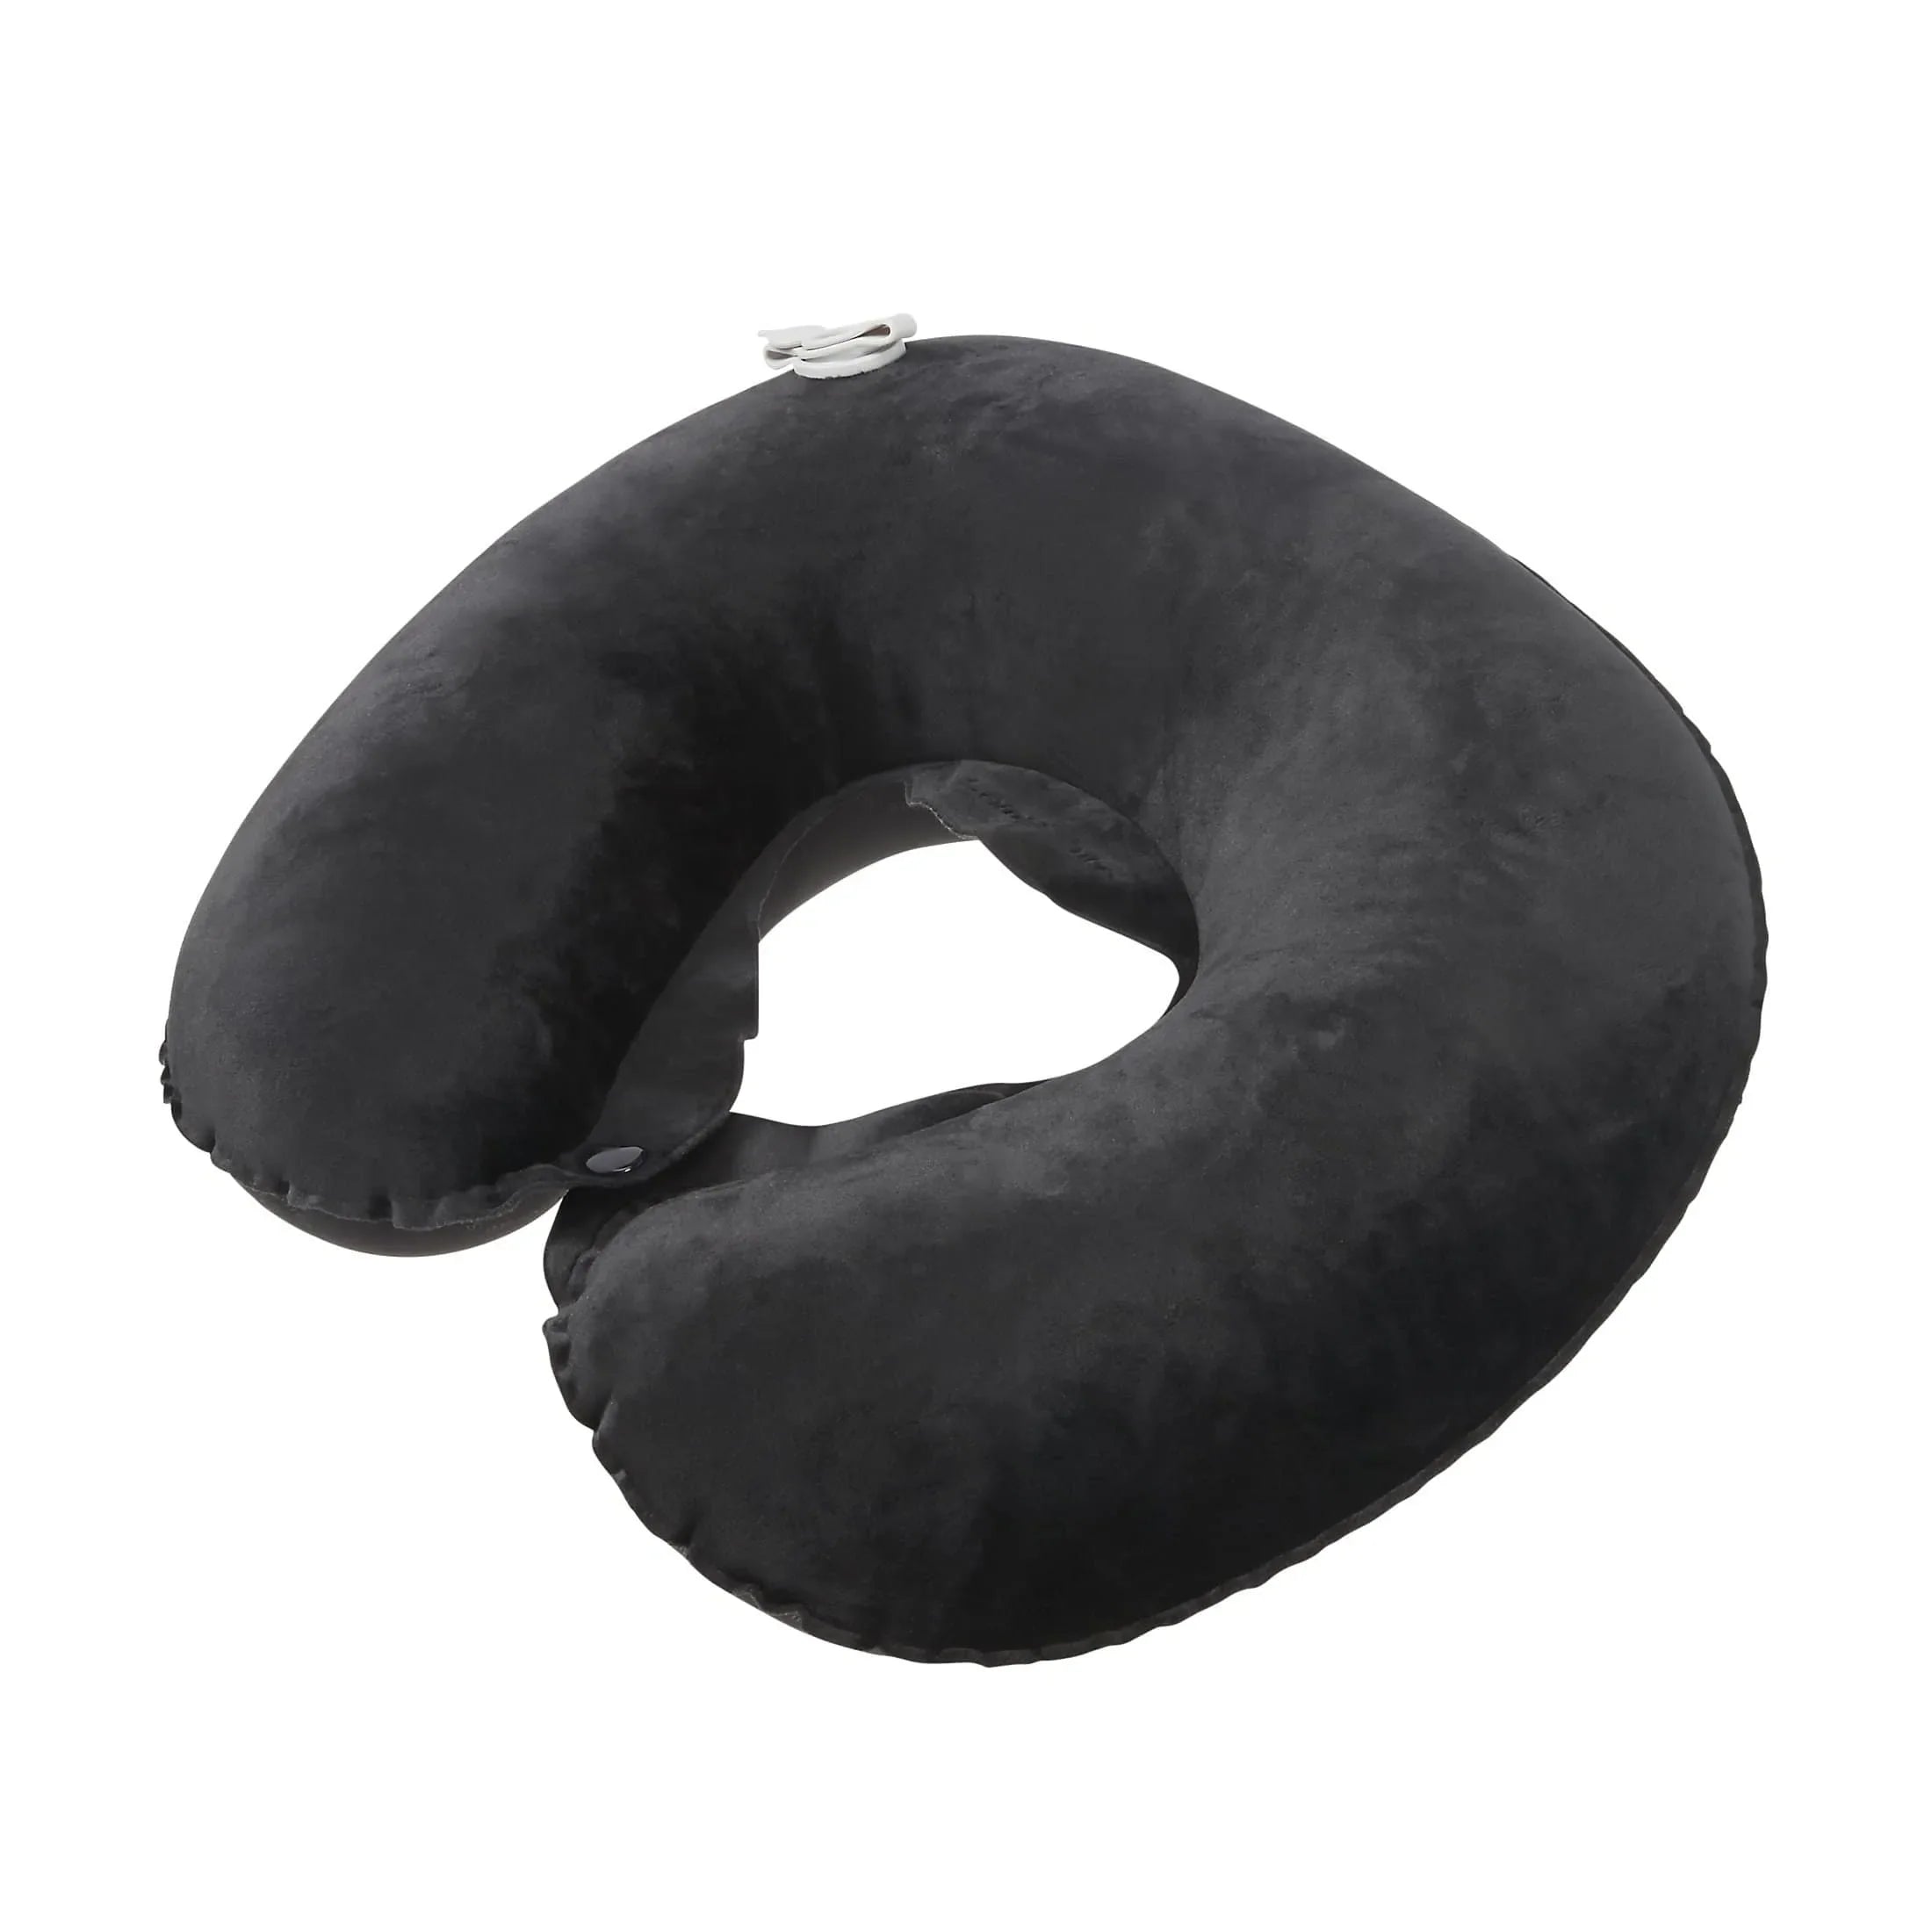 Samsonite Travel Accessories Inflatable neck pillow - black